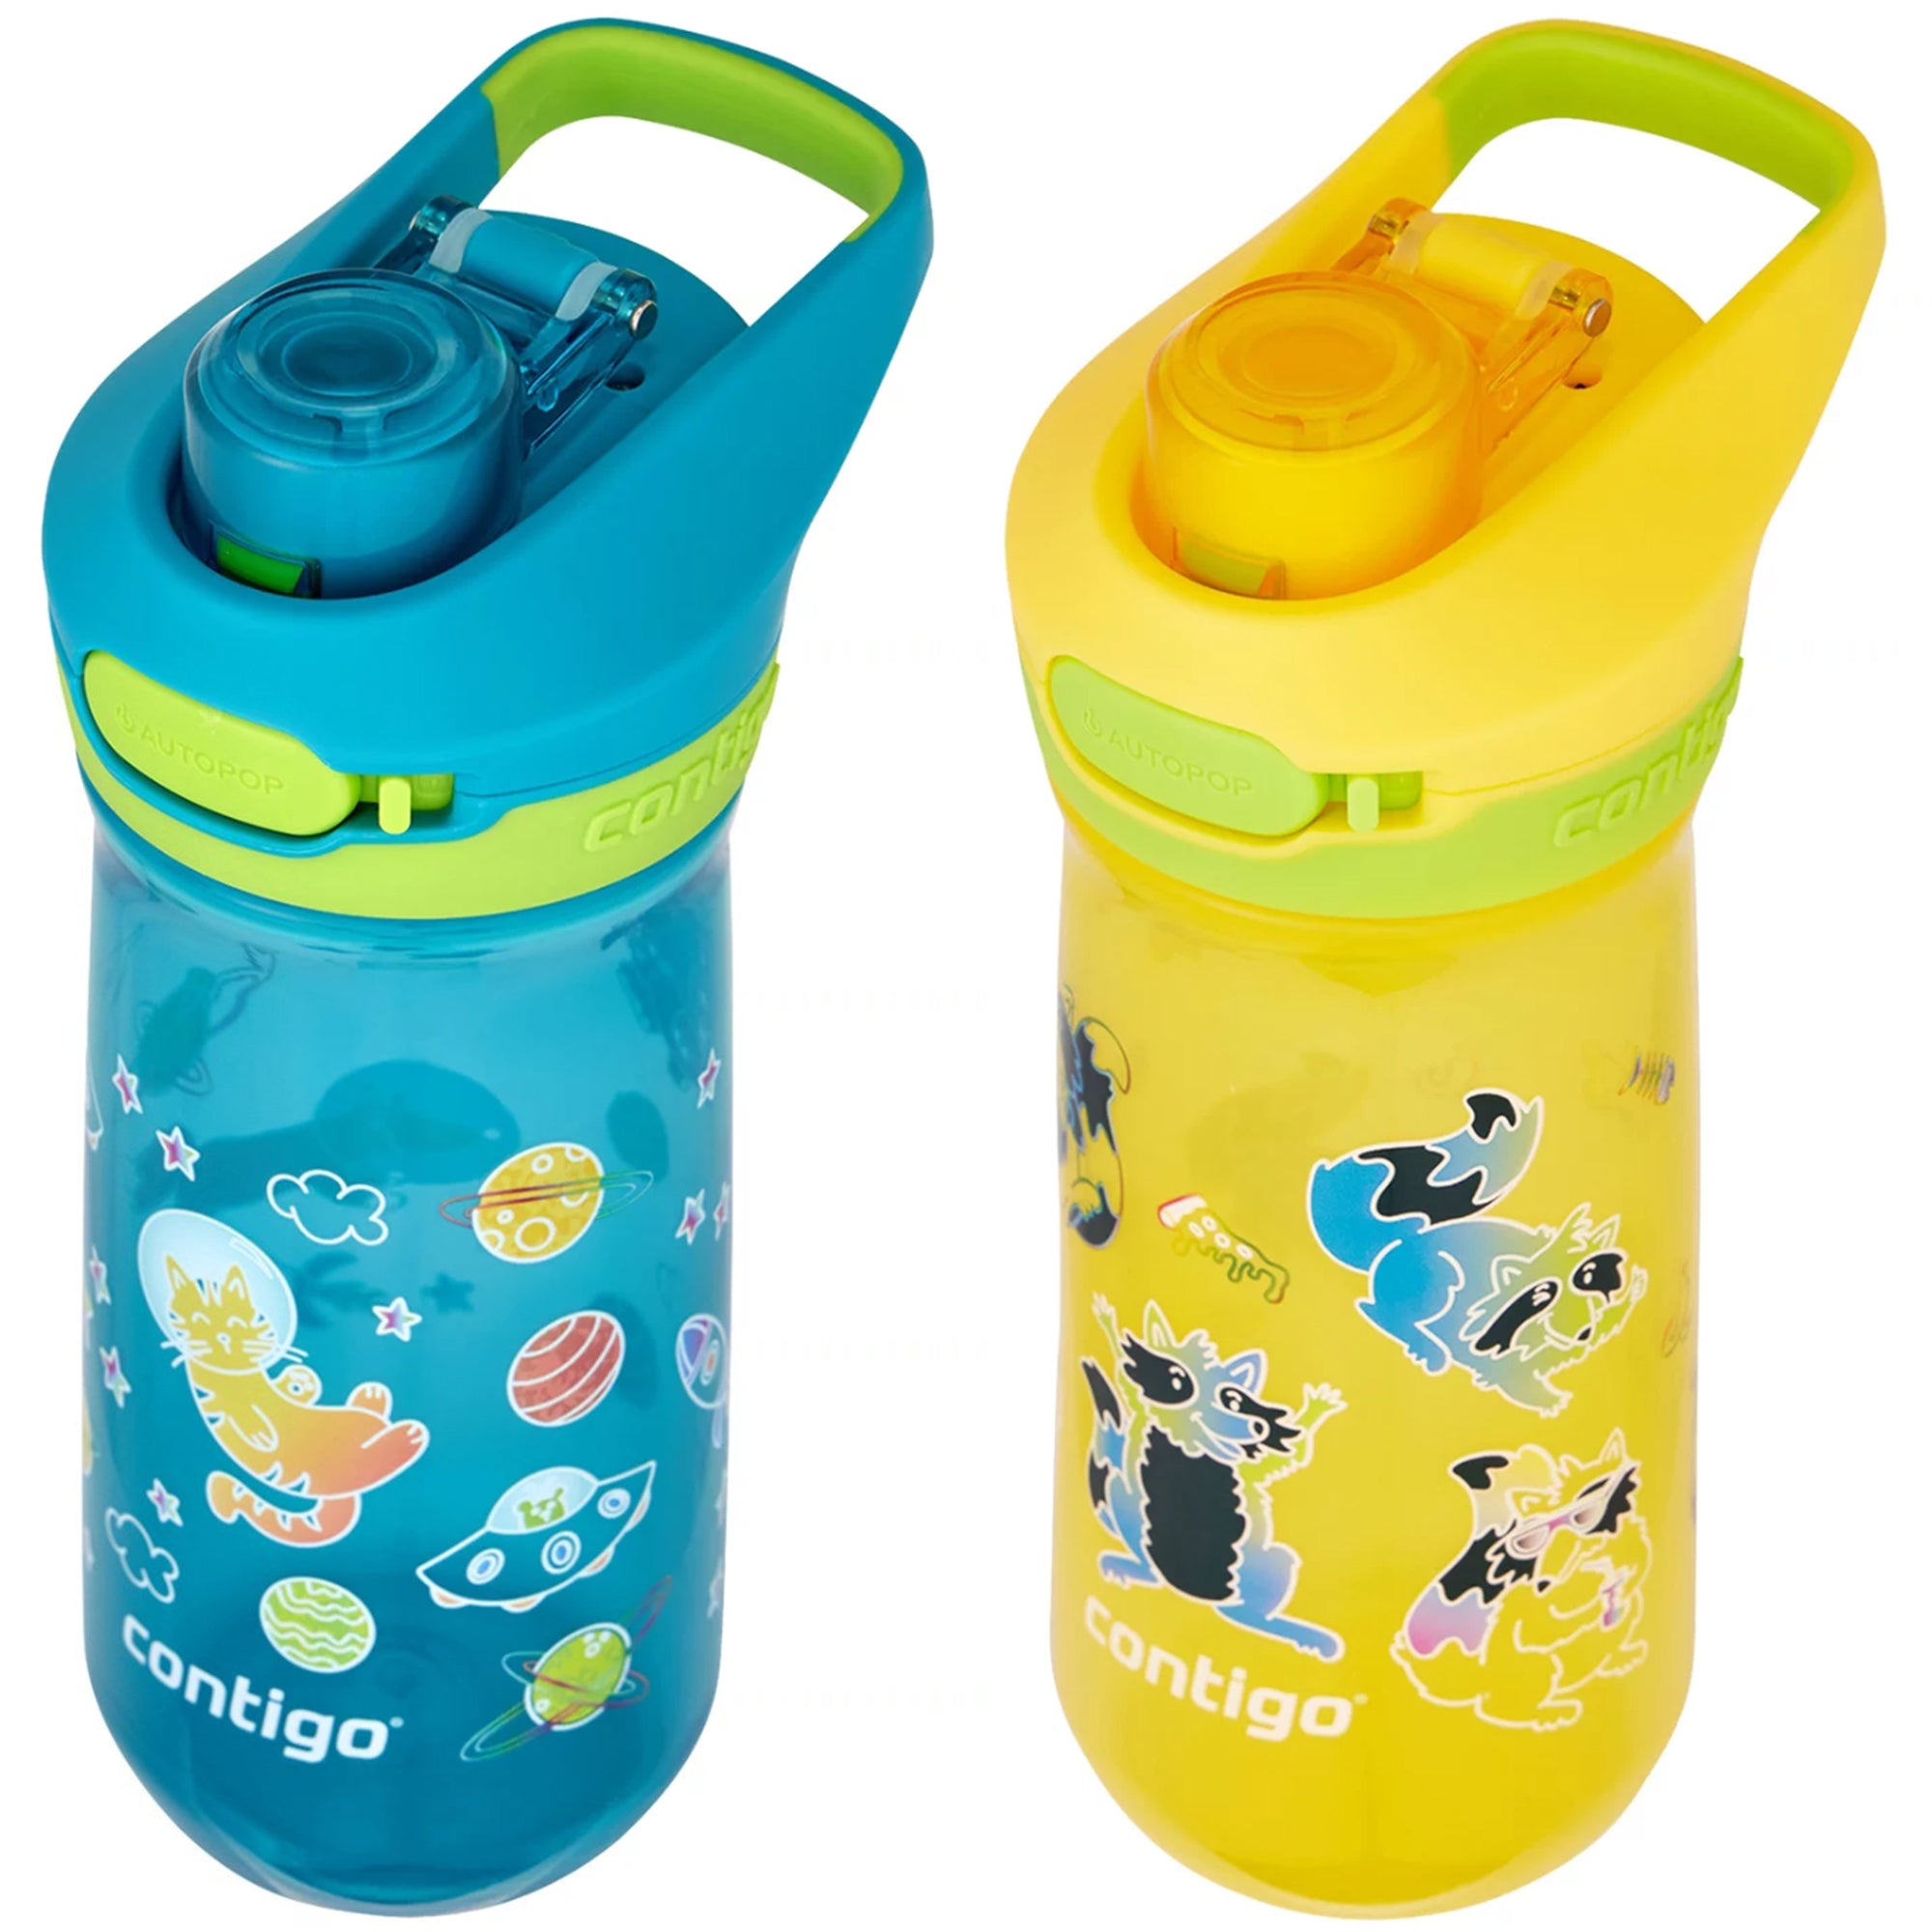 Contigo Kid's 14 oz. Jessie Water Bottle 2-Pack - Spacecraft/Trash Pandas Contigo